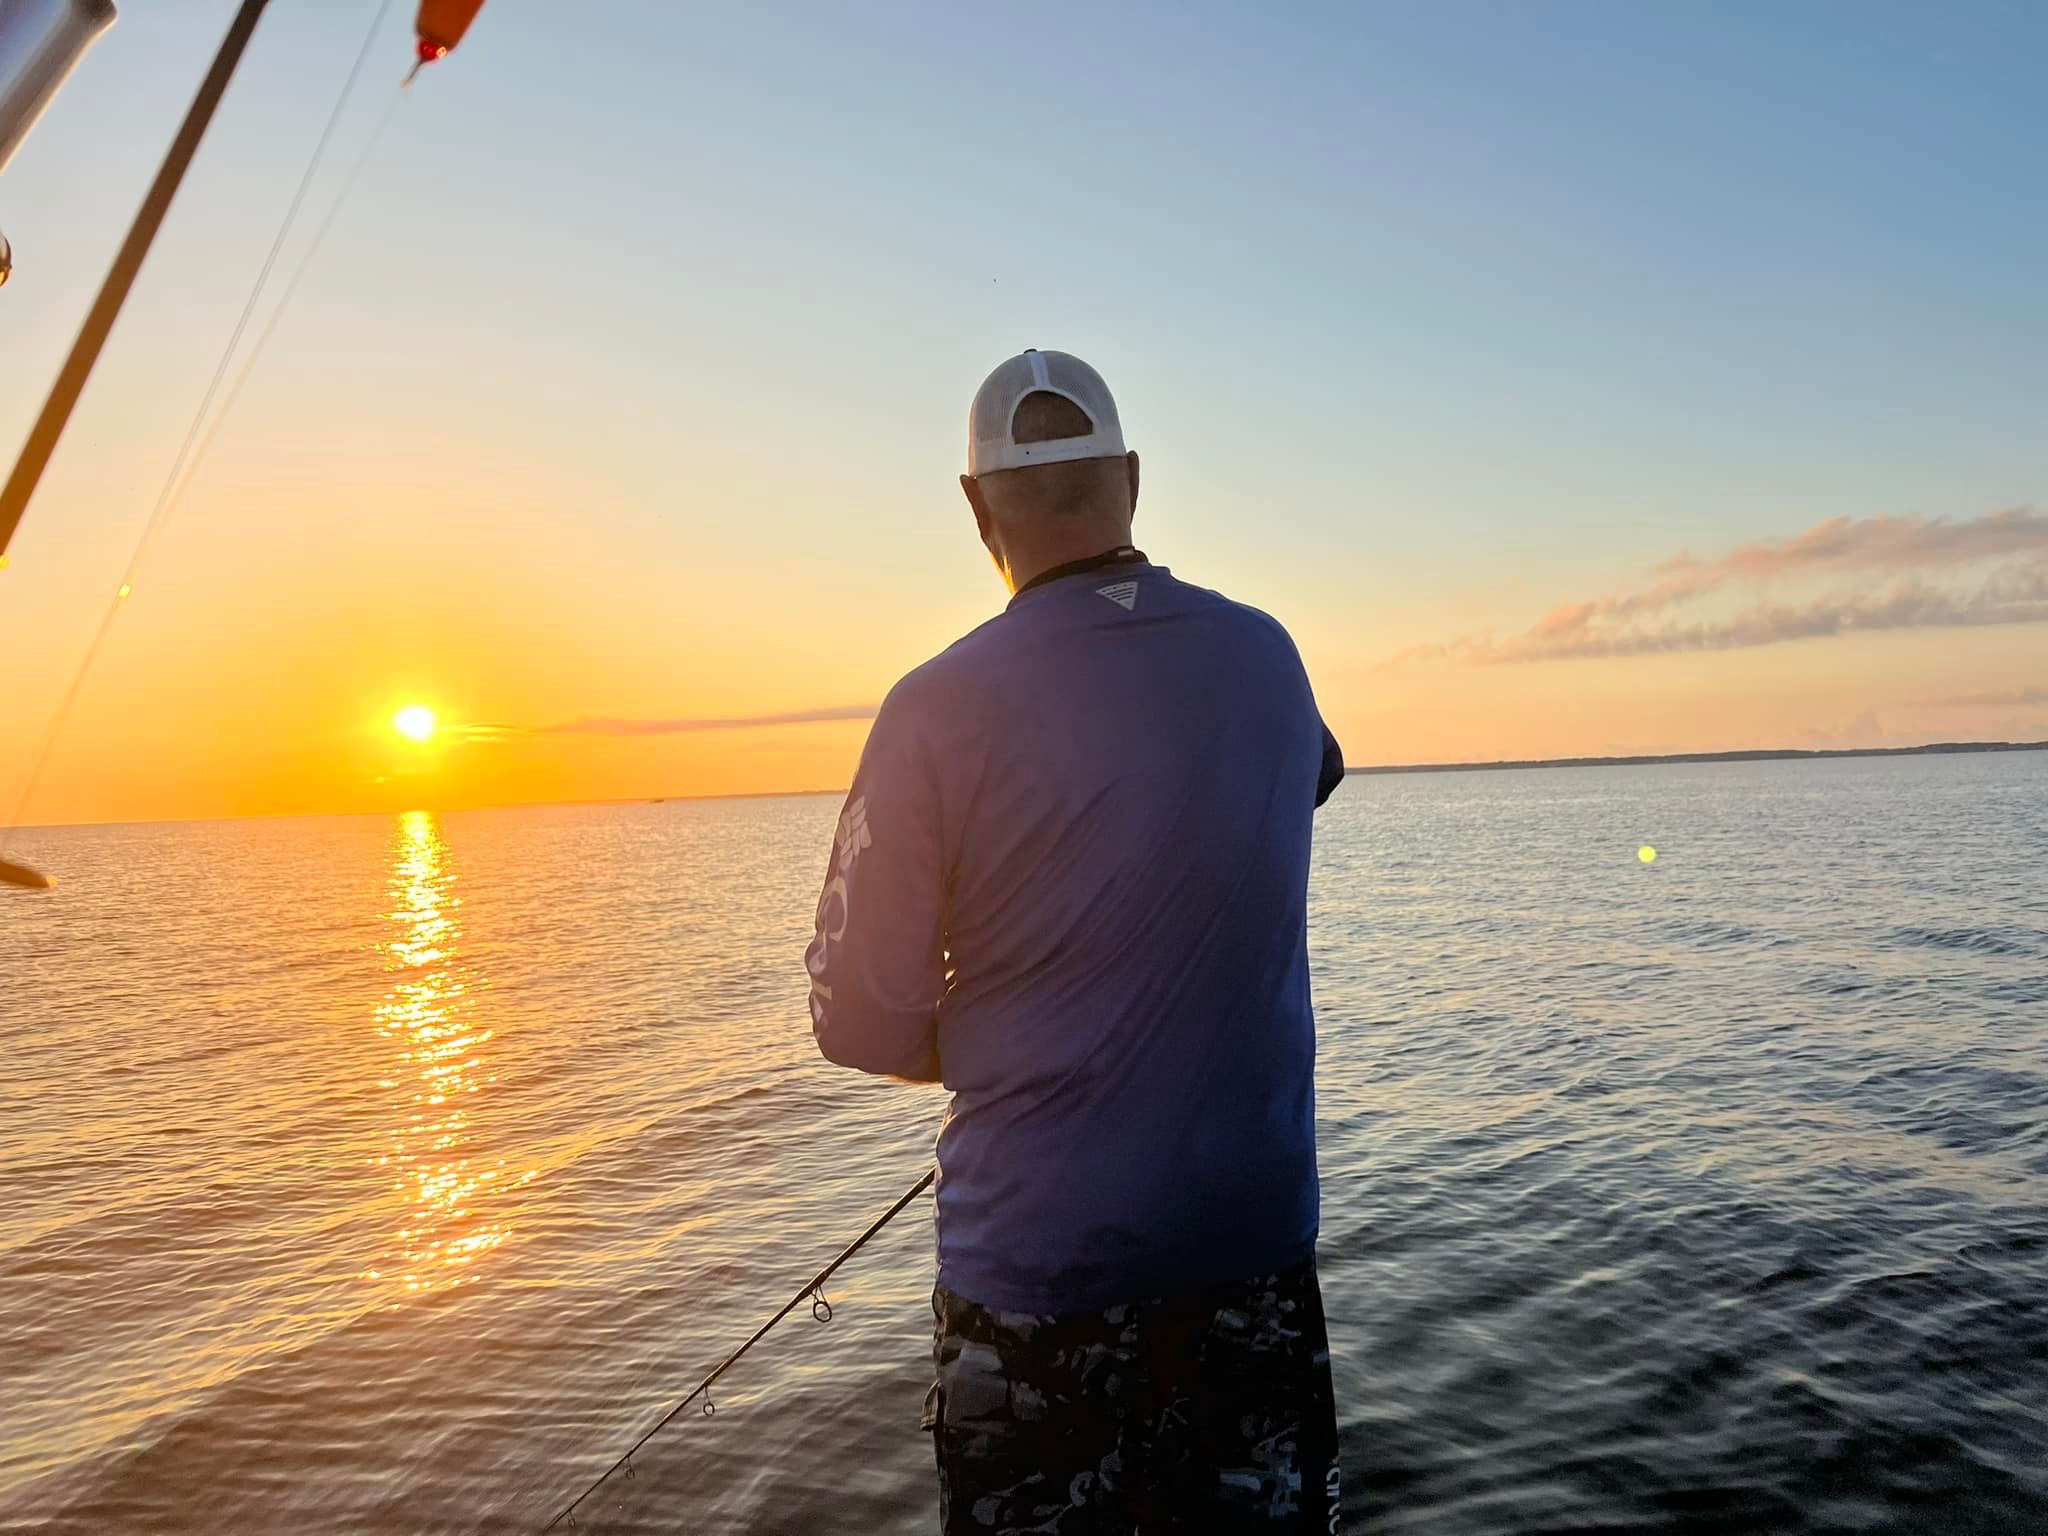 Get Your Valid North Carolina Fishing License